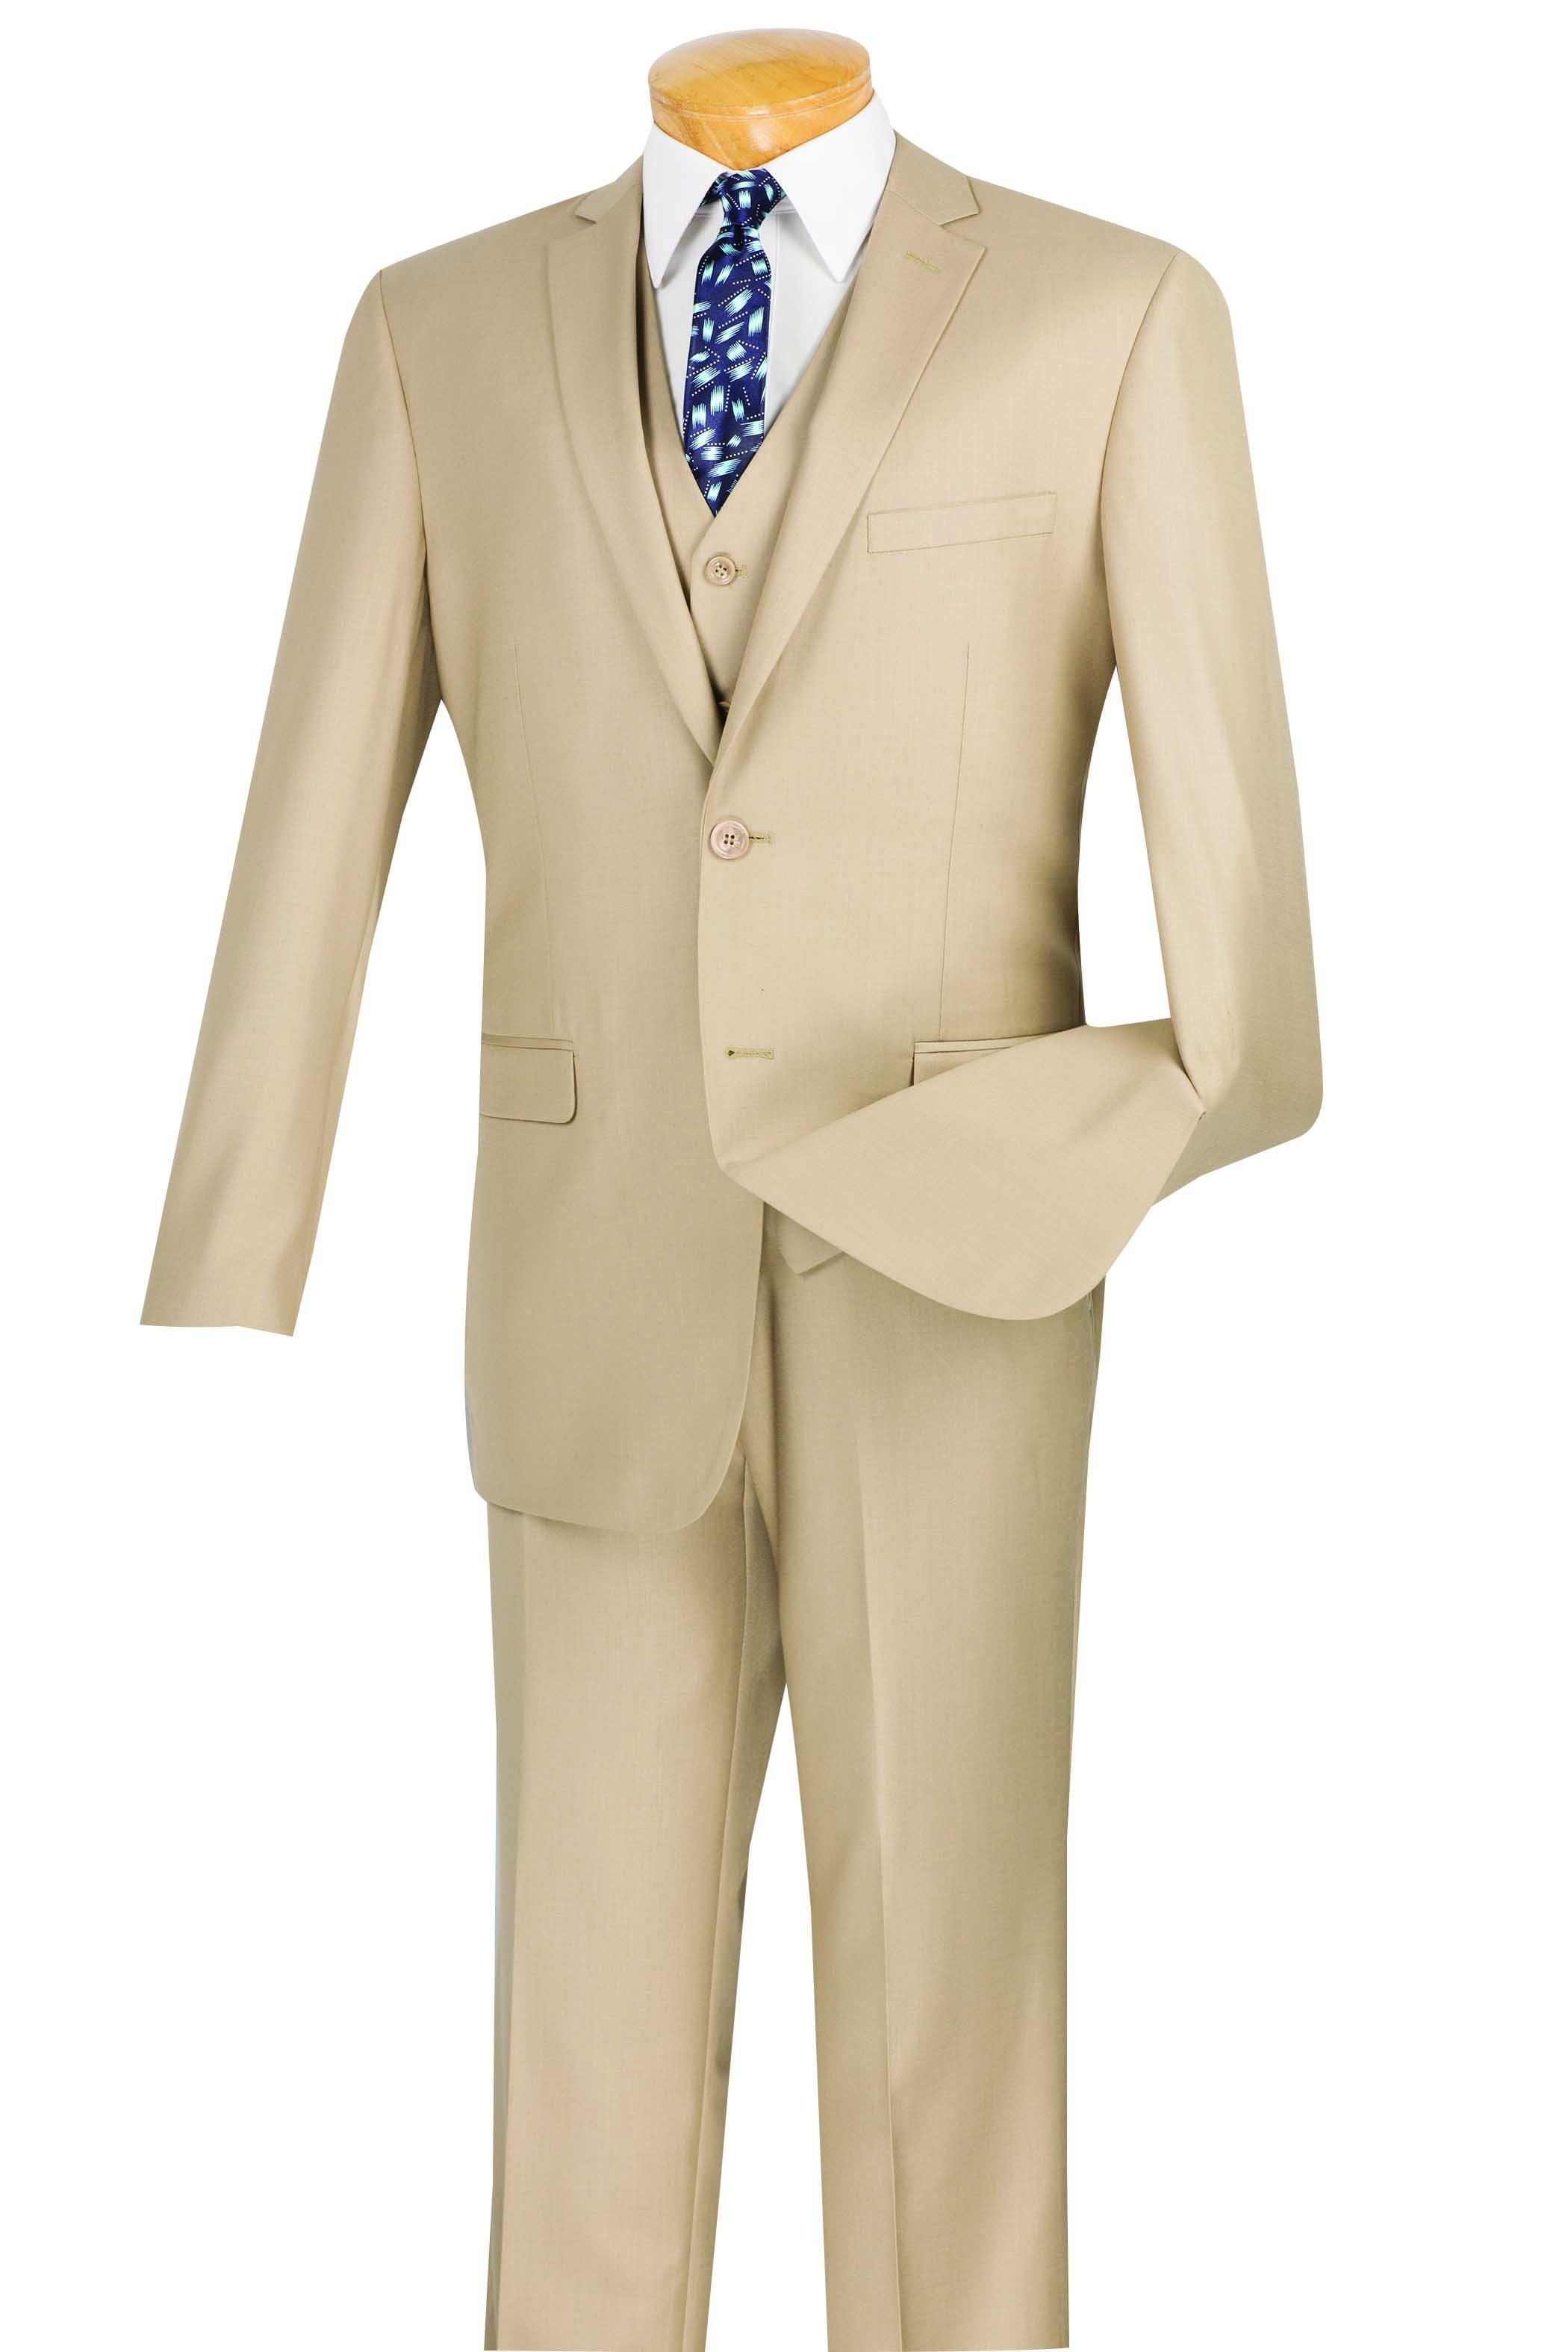 Slim Fit Men's Suit 3 Piece 2 Button in Beige